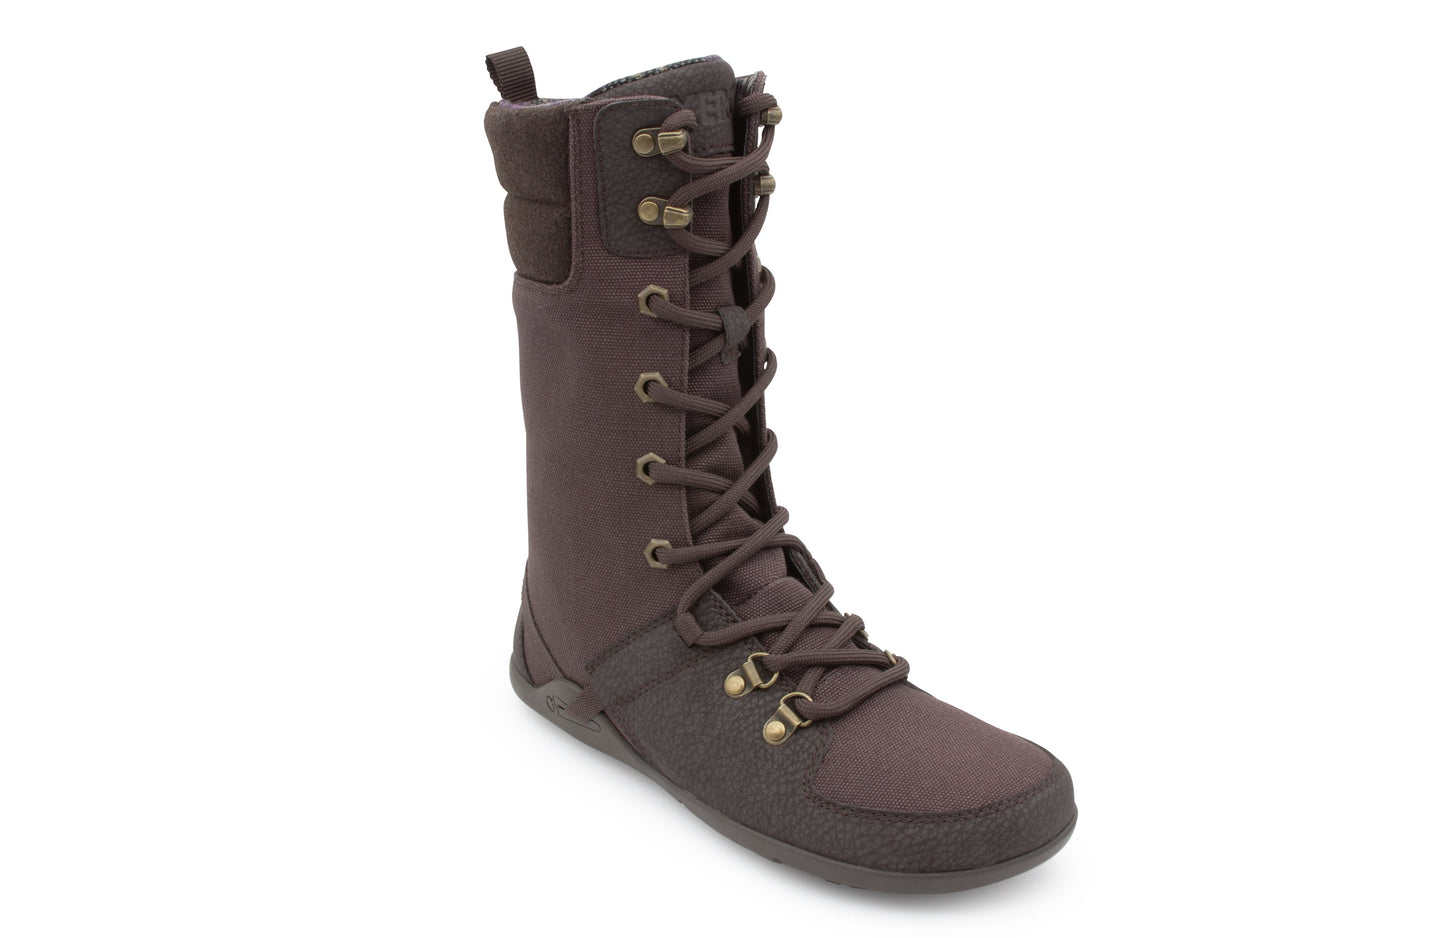 Xero Shoes Mika barfods vinterstøvler til kvinder i farven chocolate plum, vinklet